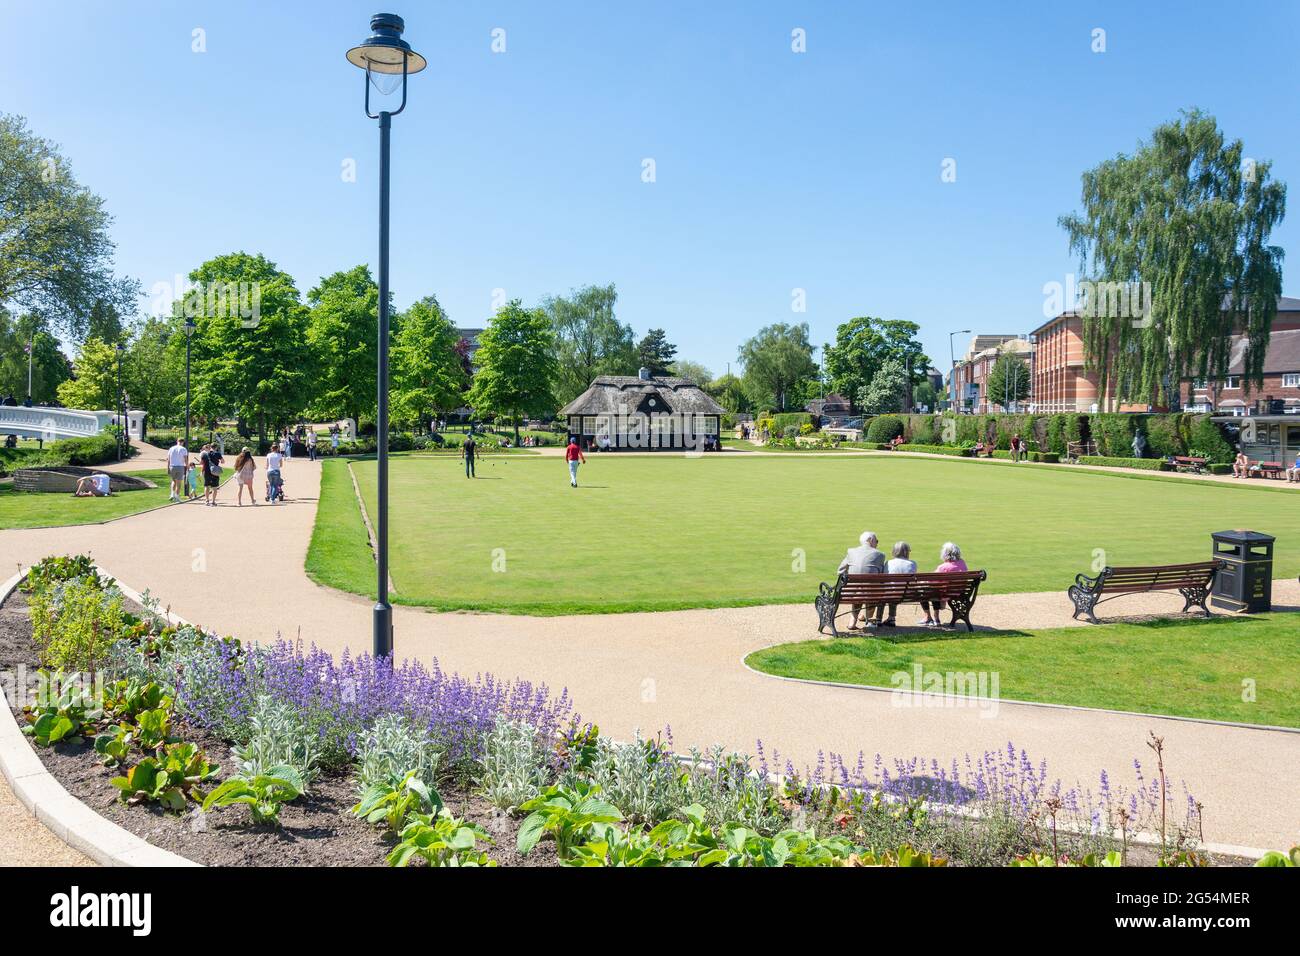 Bowling Green, Victoria Park, Tenterbanks, Stafford, Staffordshire, England, United Kingdom Stock Photo